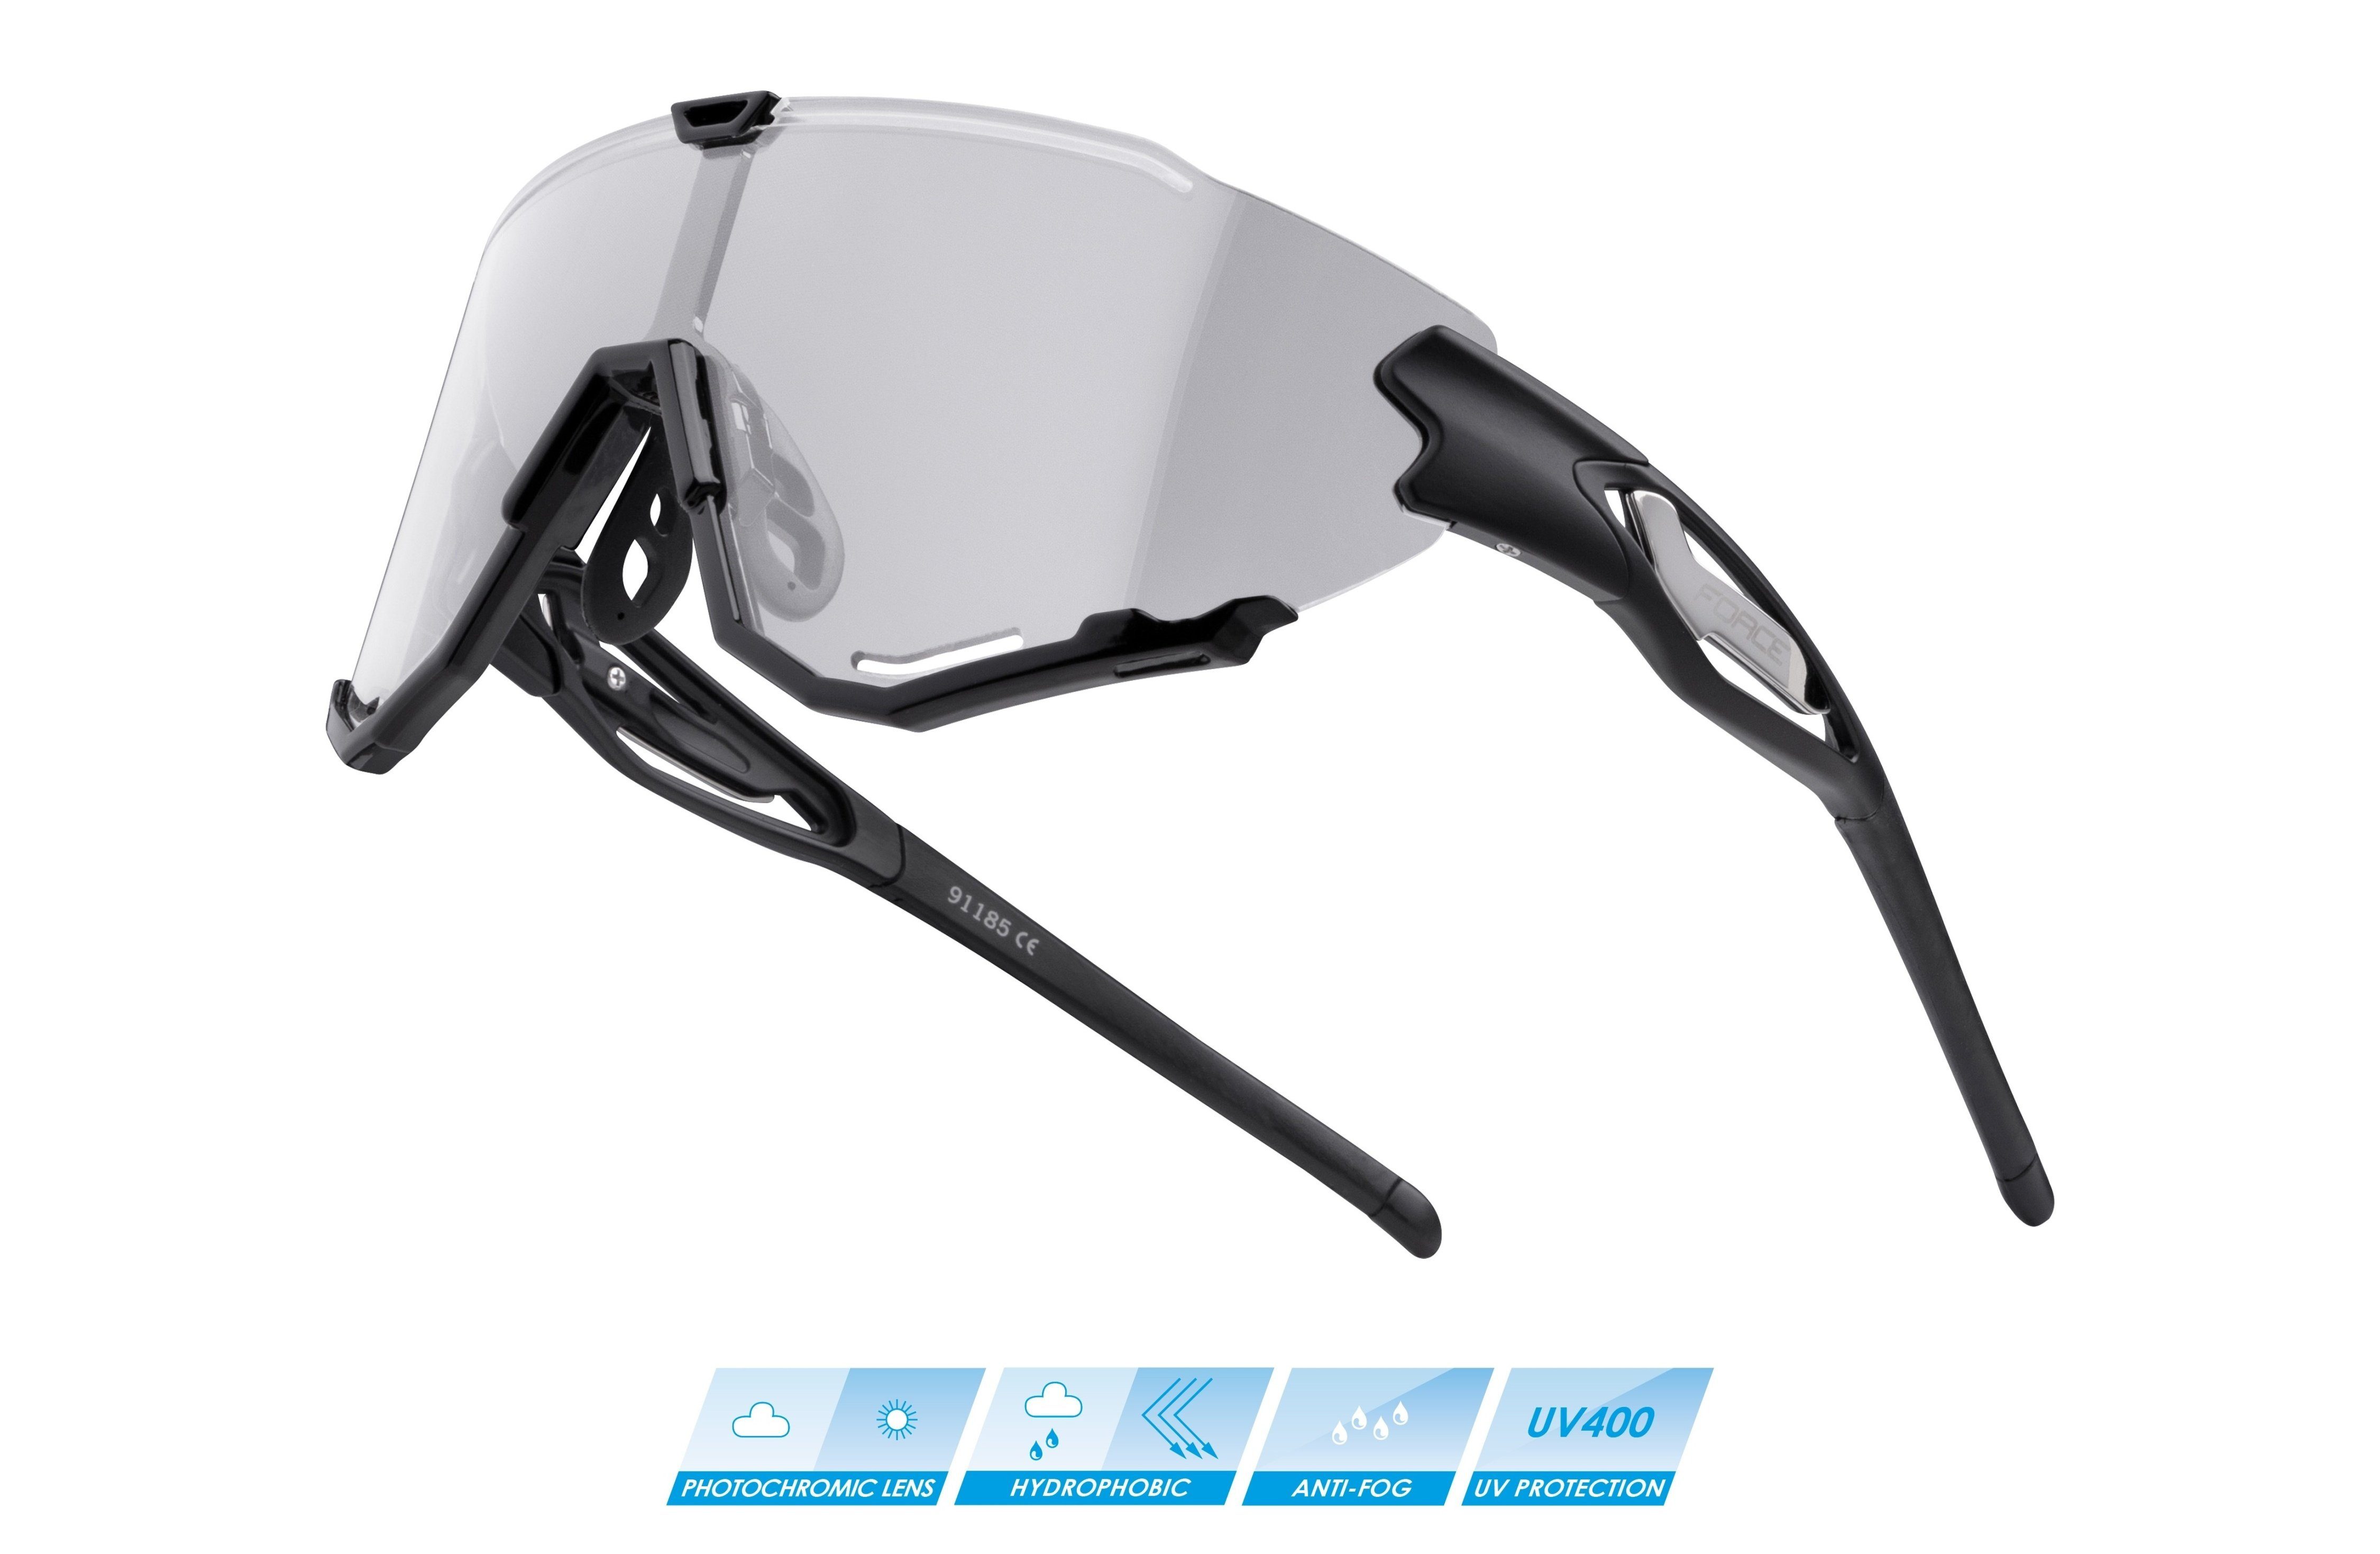 Glas FORCE FORCE schwarzes CREED phototropes Fahrradbrille Sonnenbrille